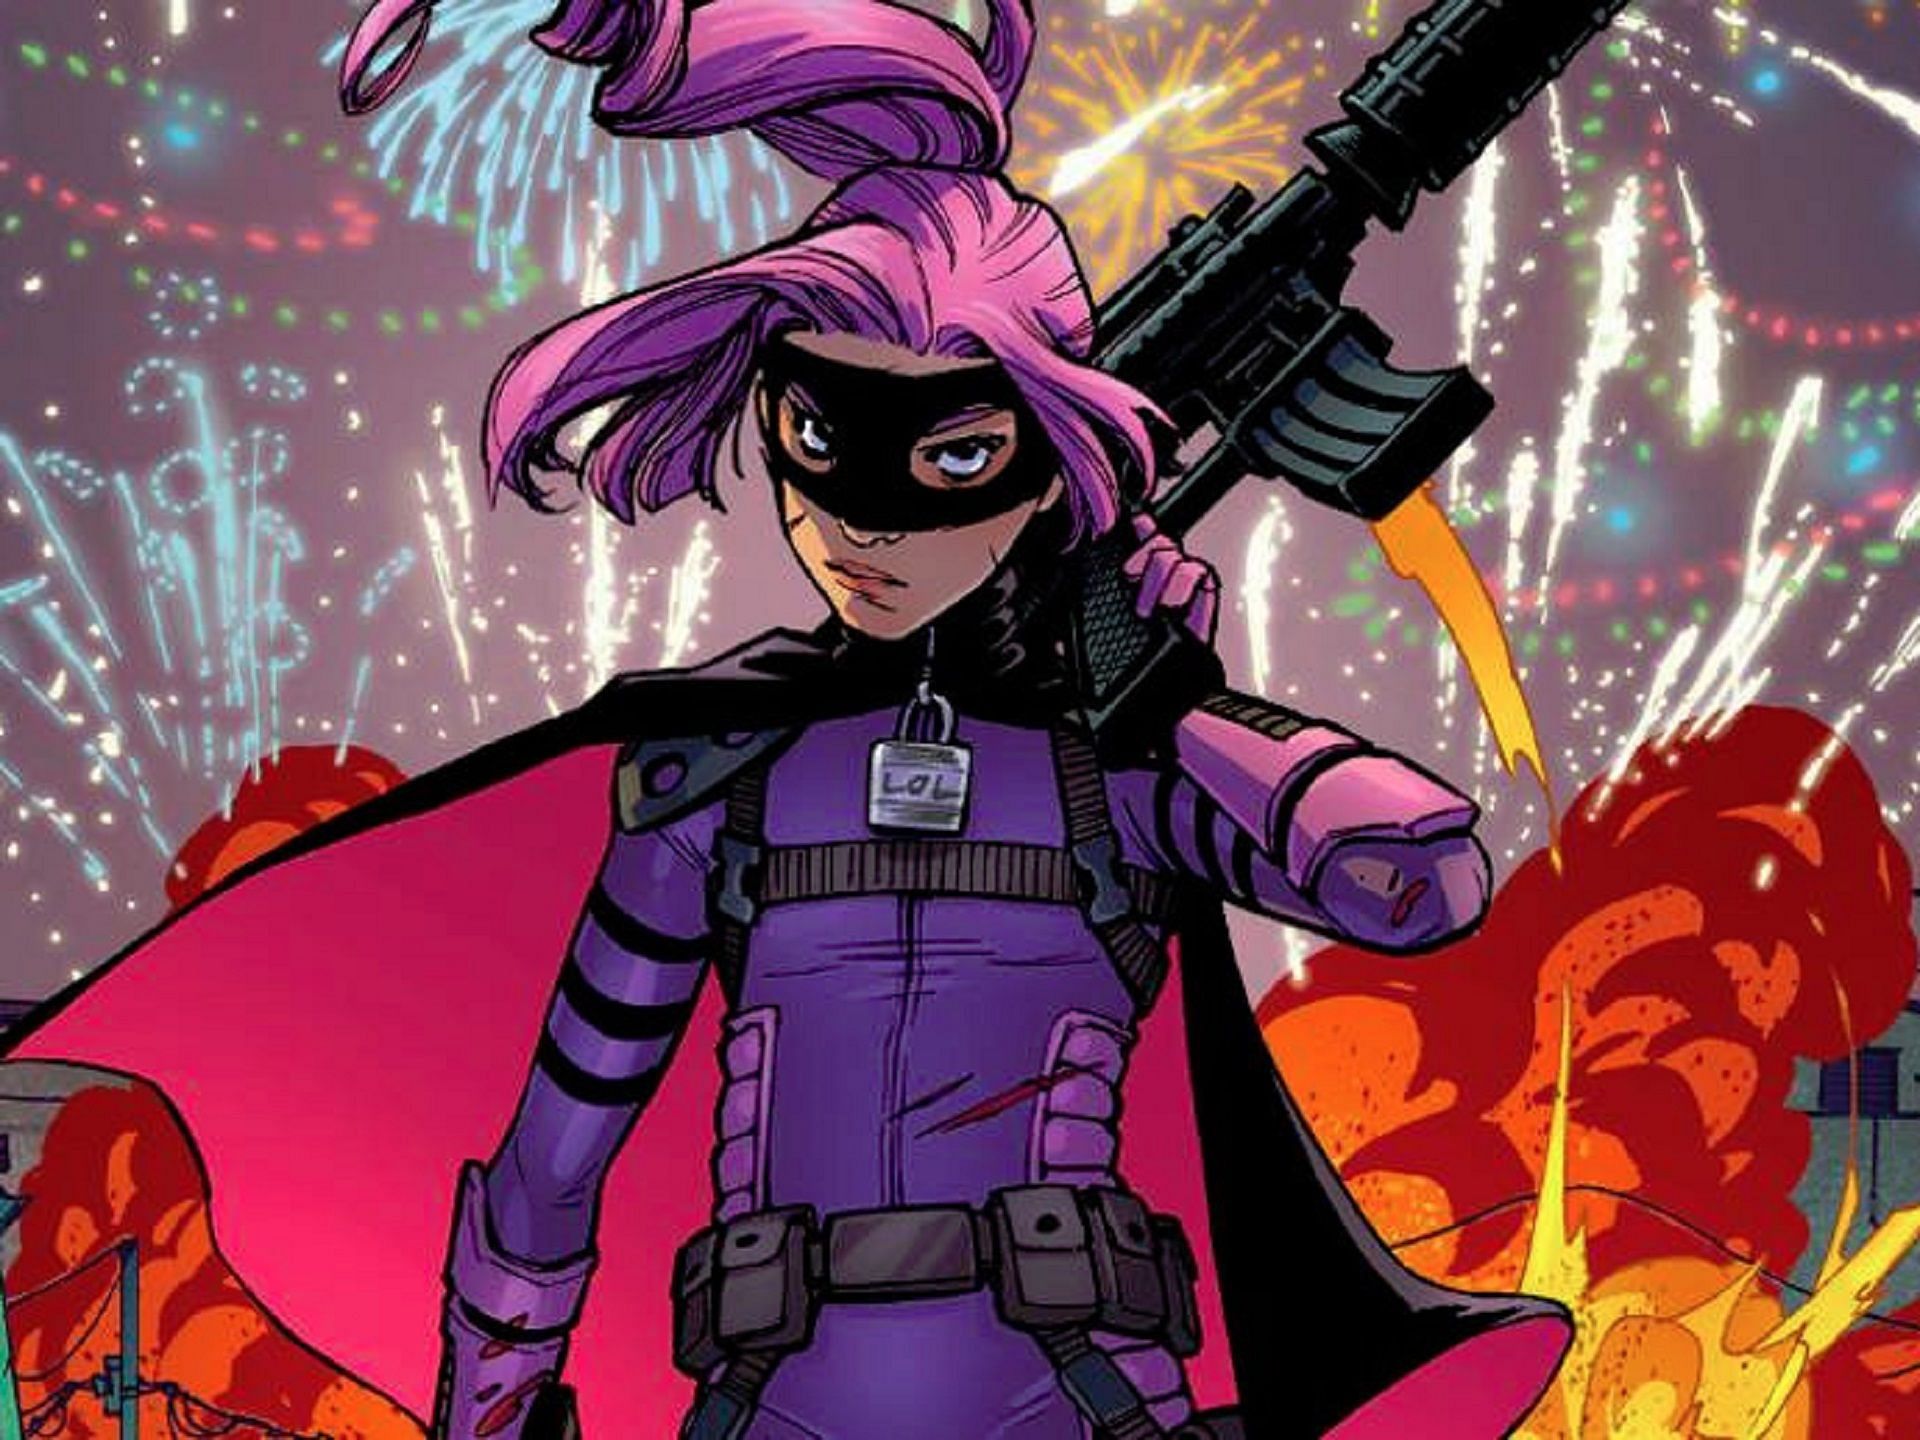 Hit-Girl is a costumed superhero (Image via Kick-ass comics)